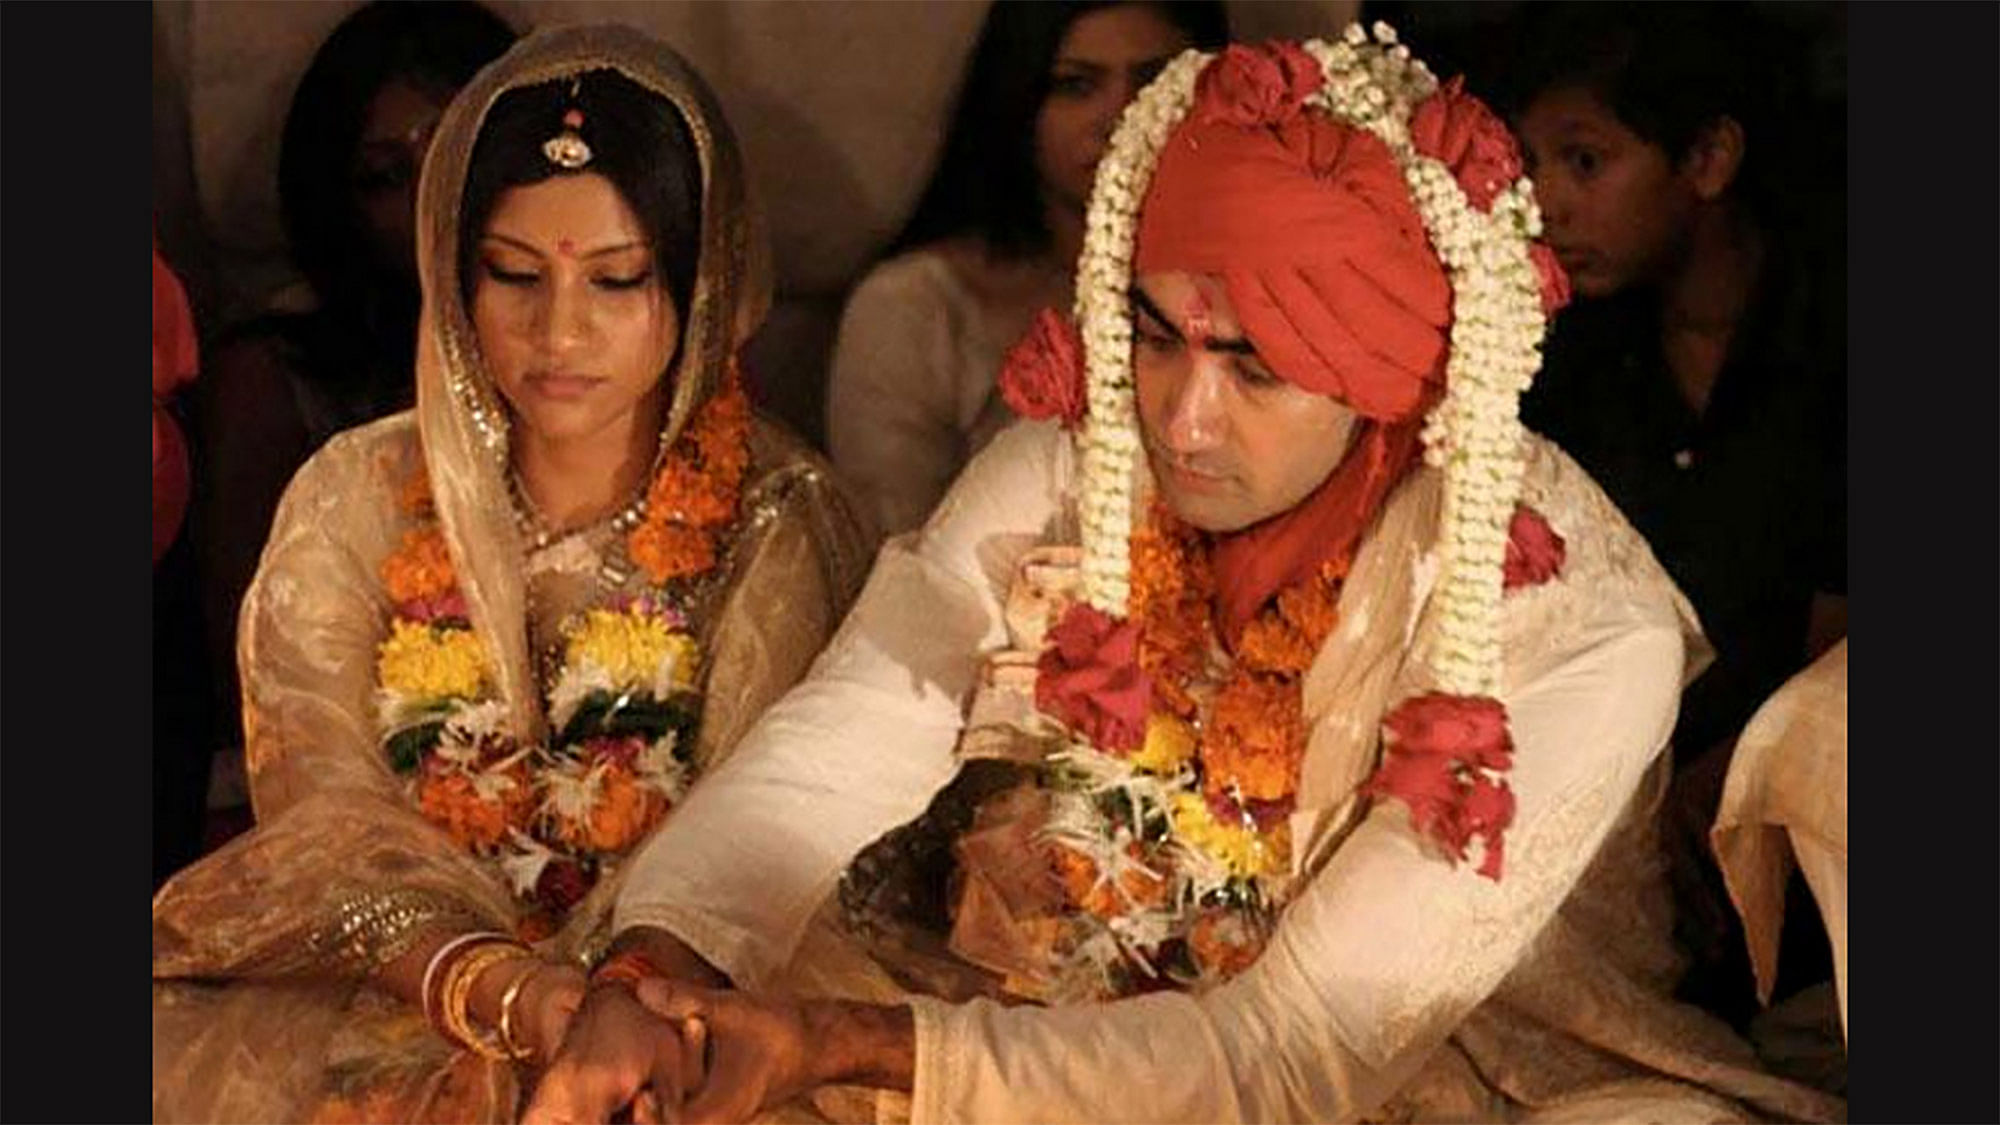  Ranvir Shorey and Konkona Sen Sharma at their 2010 wedding ceremony (Photo: Twitter/<a href="https://twitter.com/buzzingnowin/status/643387860842745856">@buzzingnowin</a>)